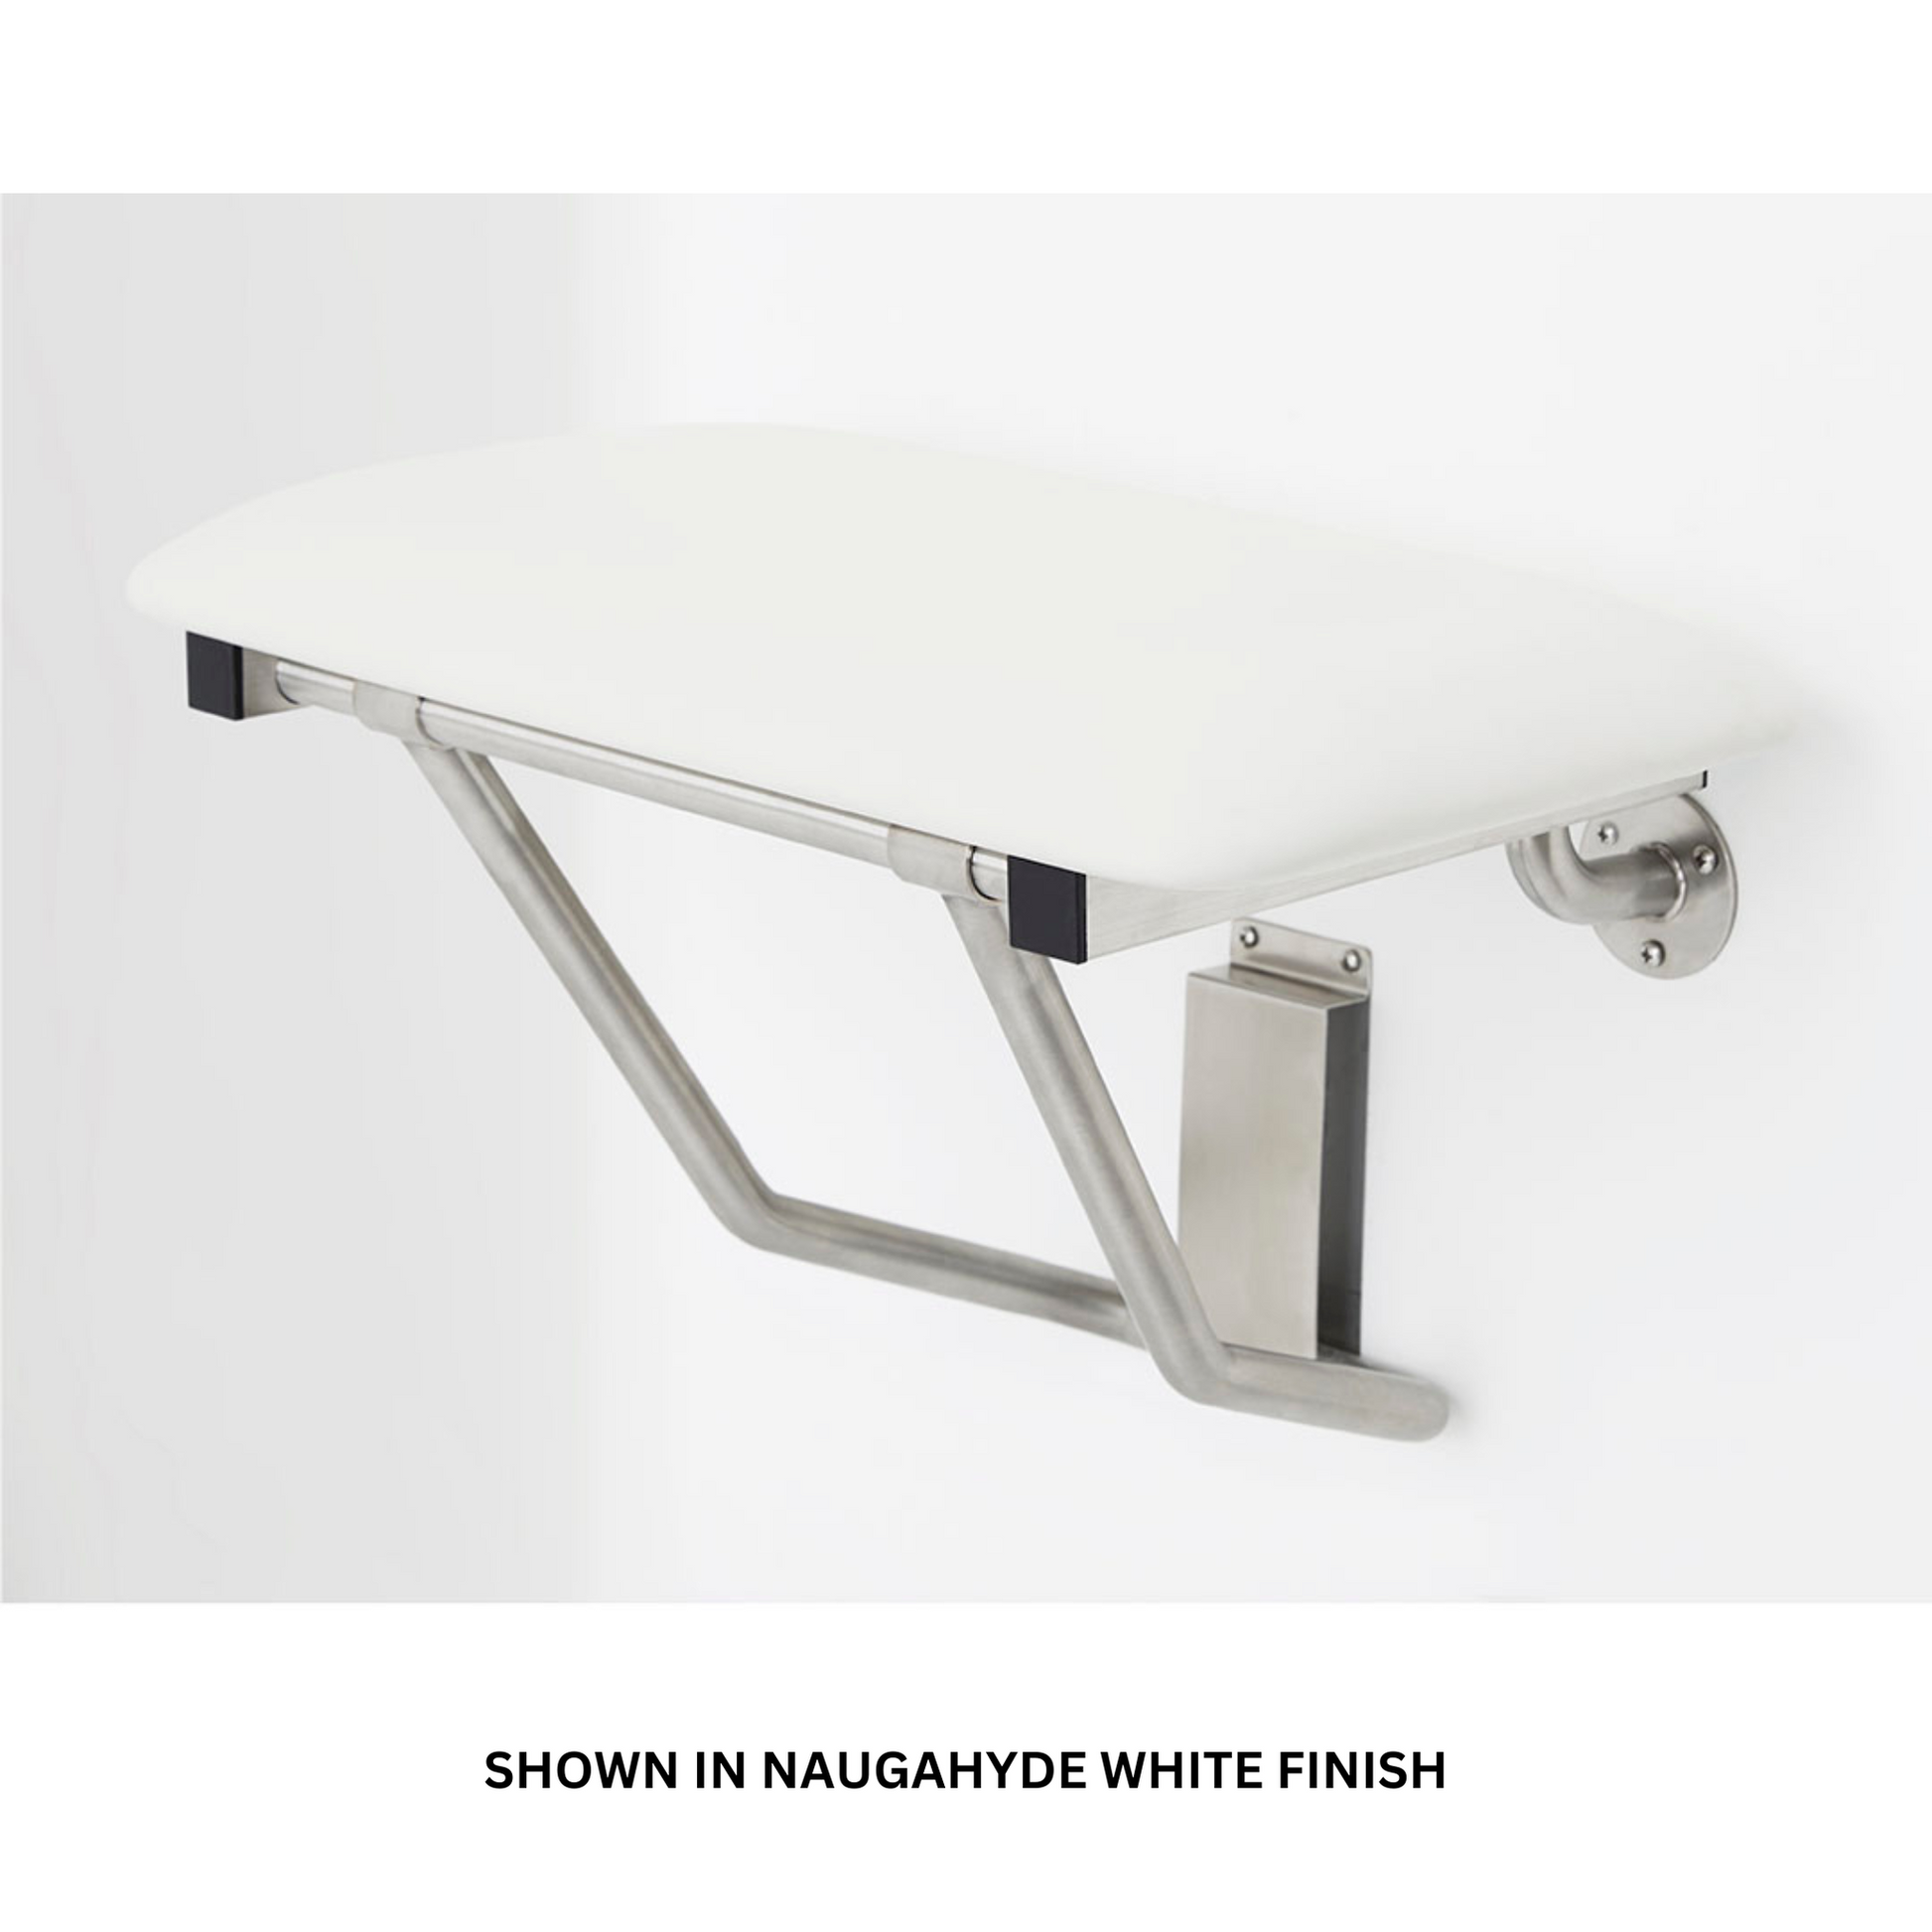 Seachrome Signature Series 32" W x 15" D Naugahyde White Cushion Seat Top Folding Wall Mount Bench Shower Seat